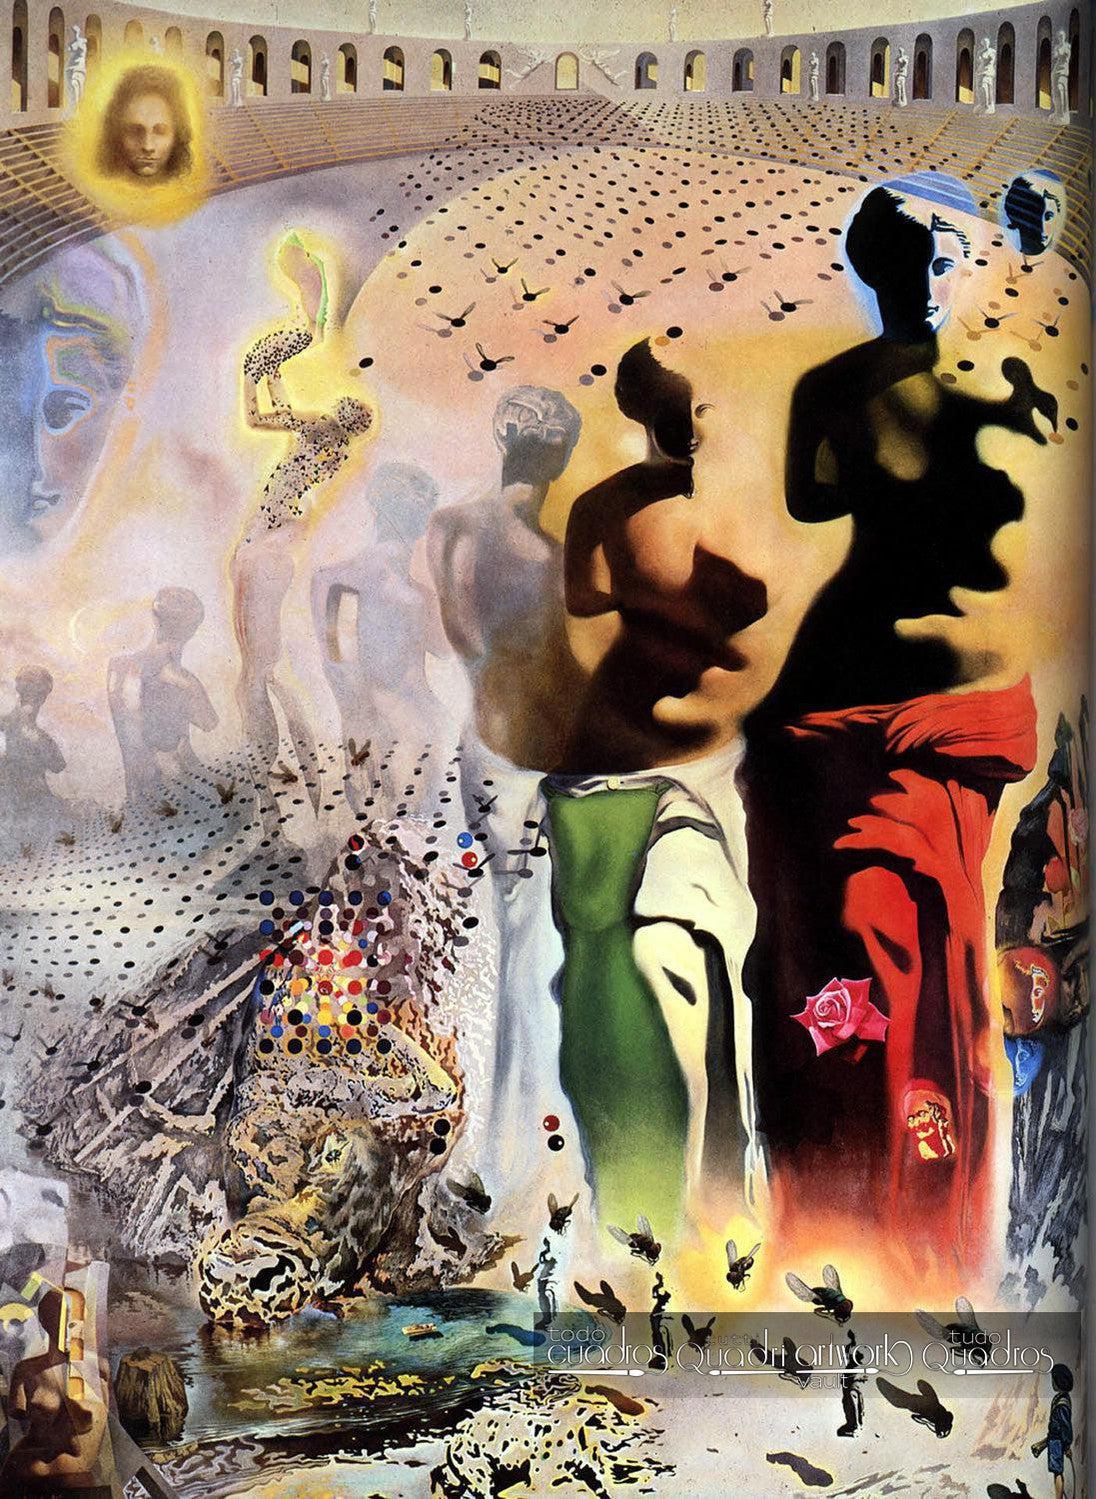 O toureiro alucinógeno, Dalí